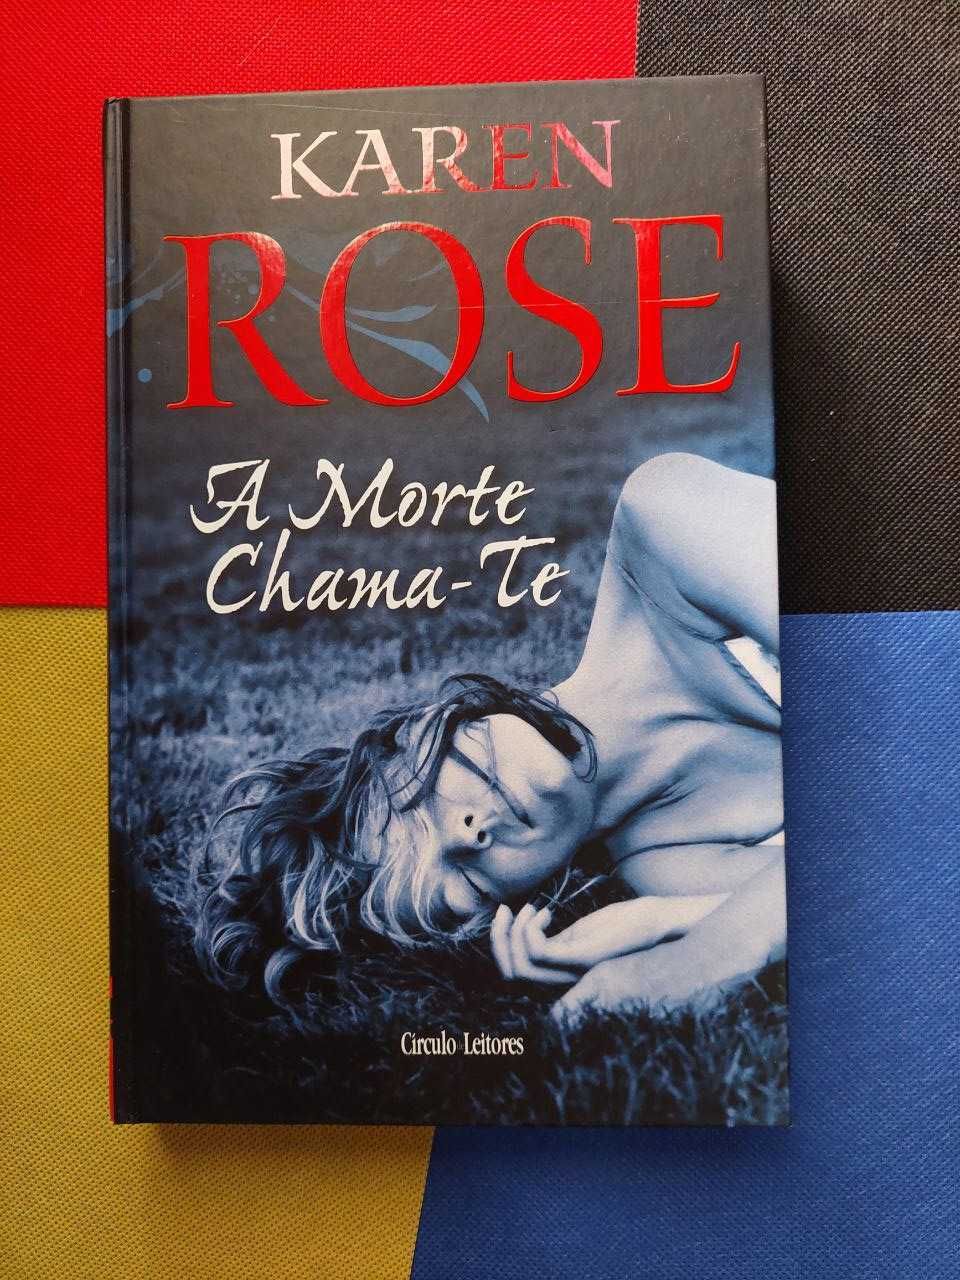 Livros de Karen Rose - 4 títulos da escritora